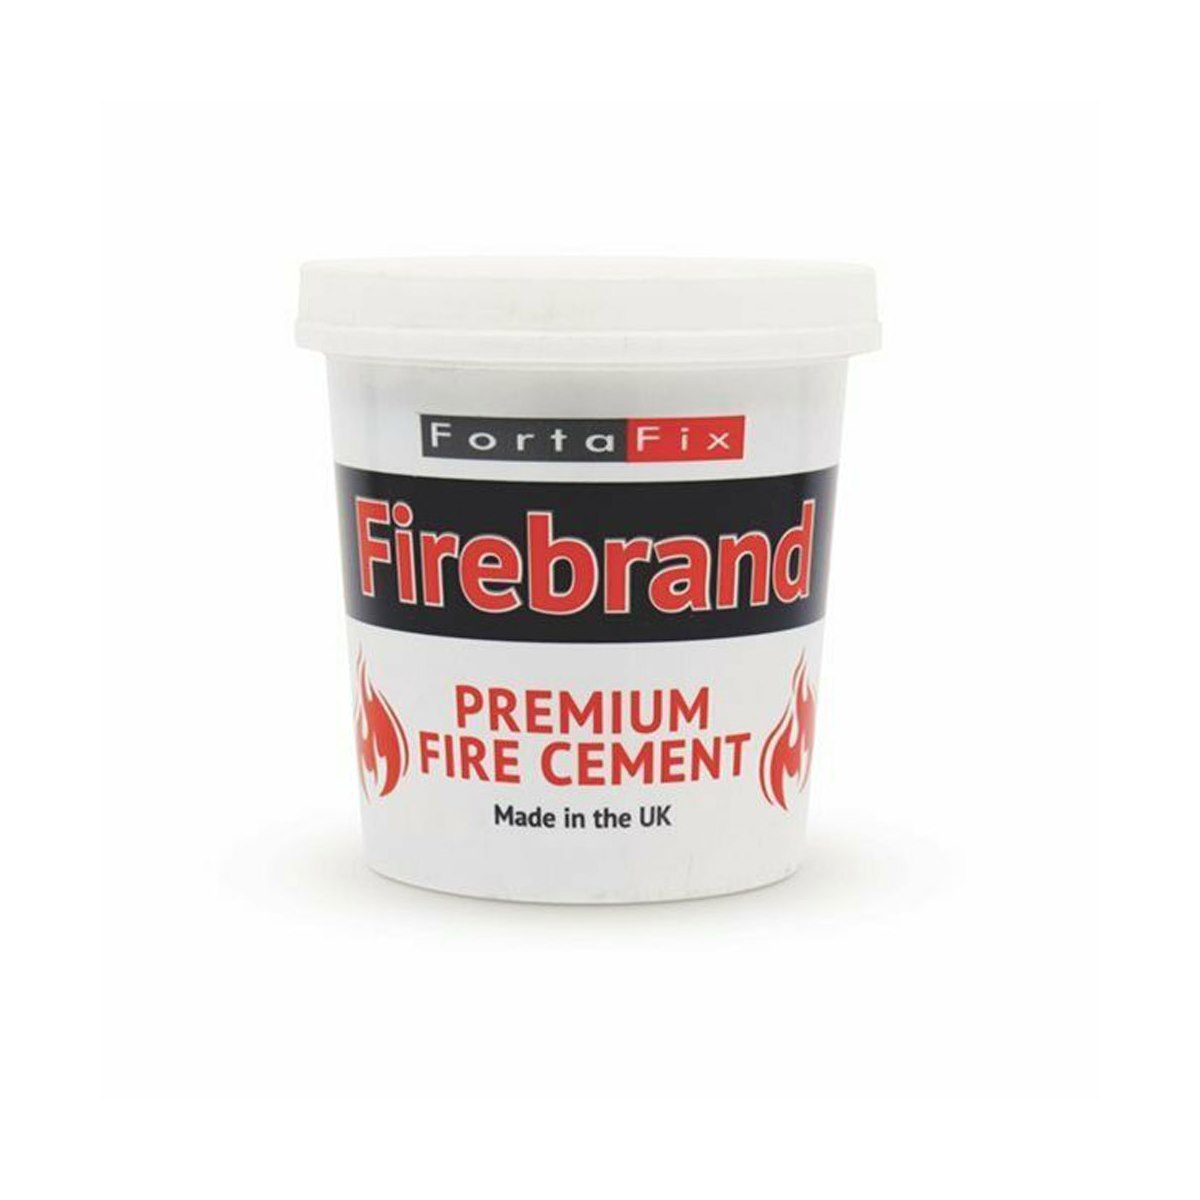 FortaFix Firebrand Premium Fire Cement